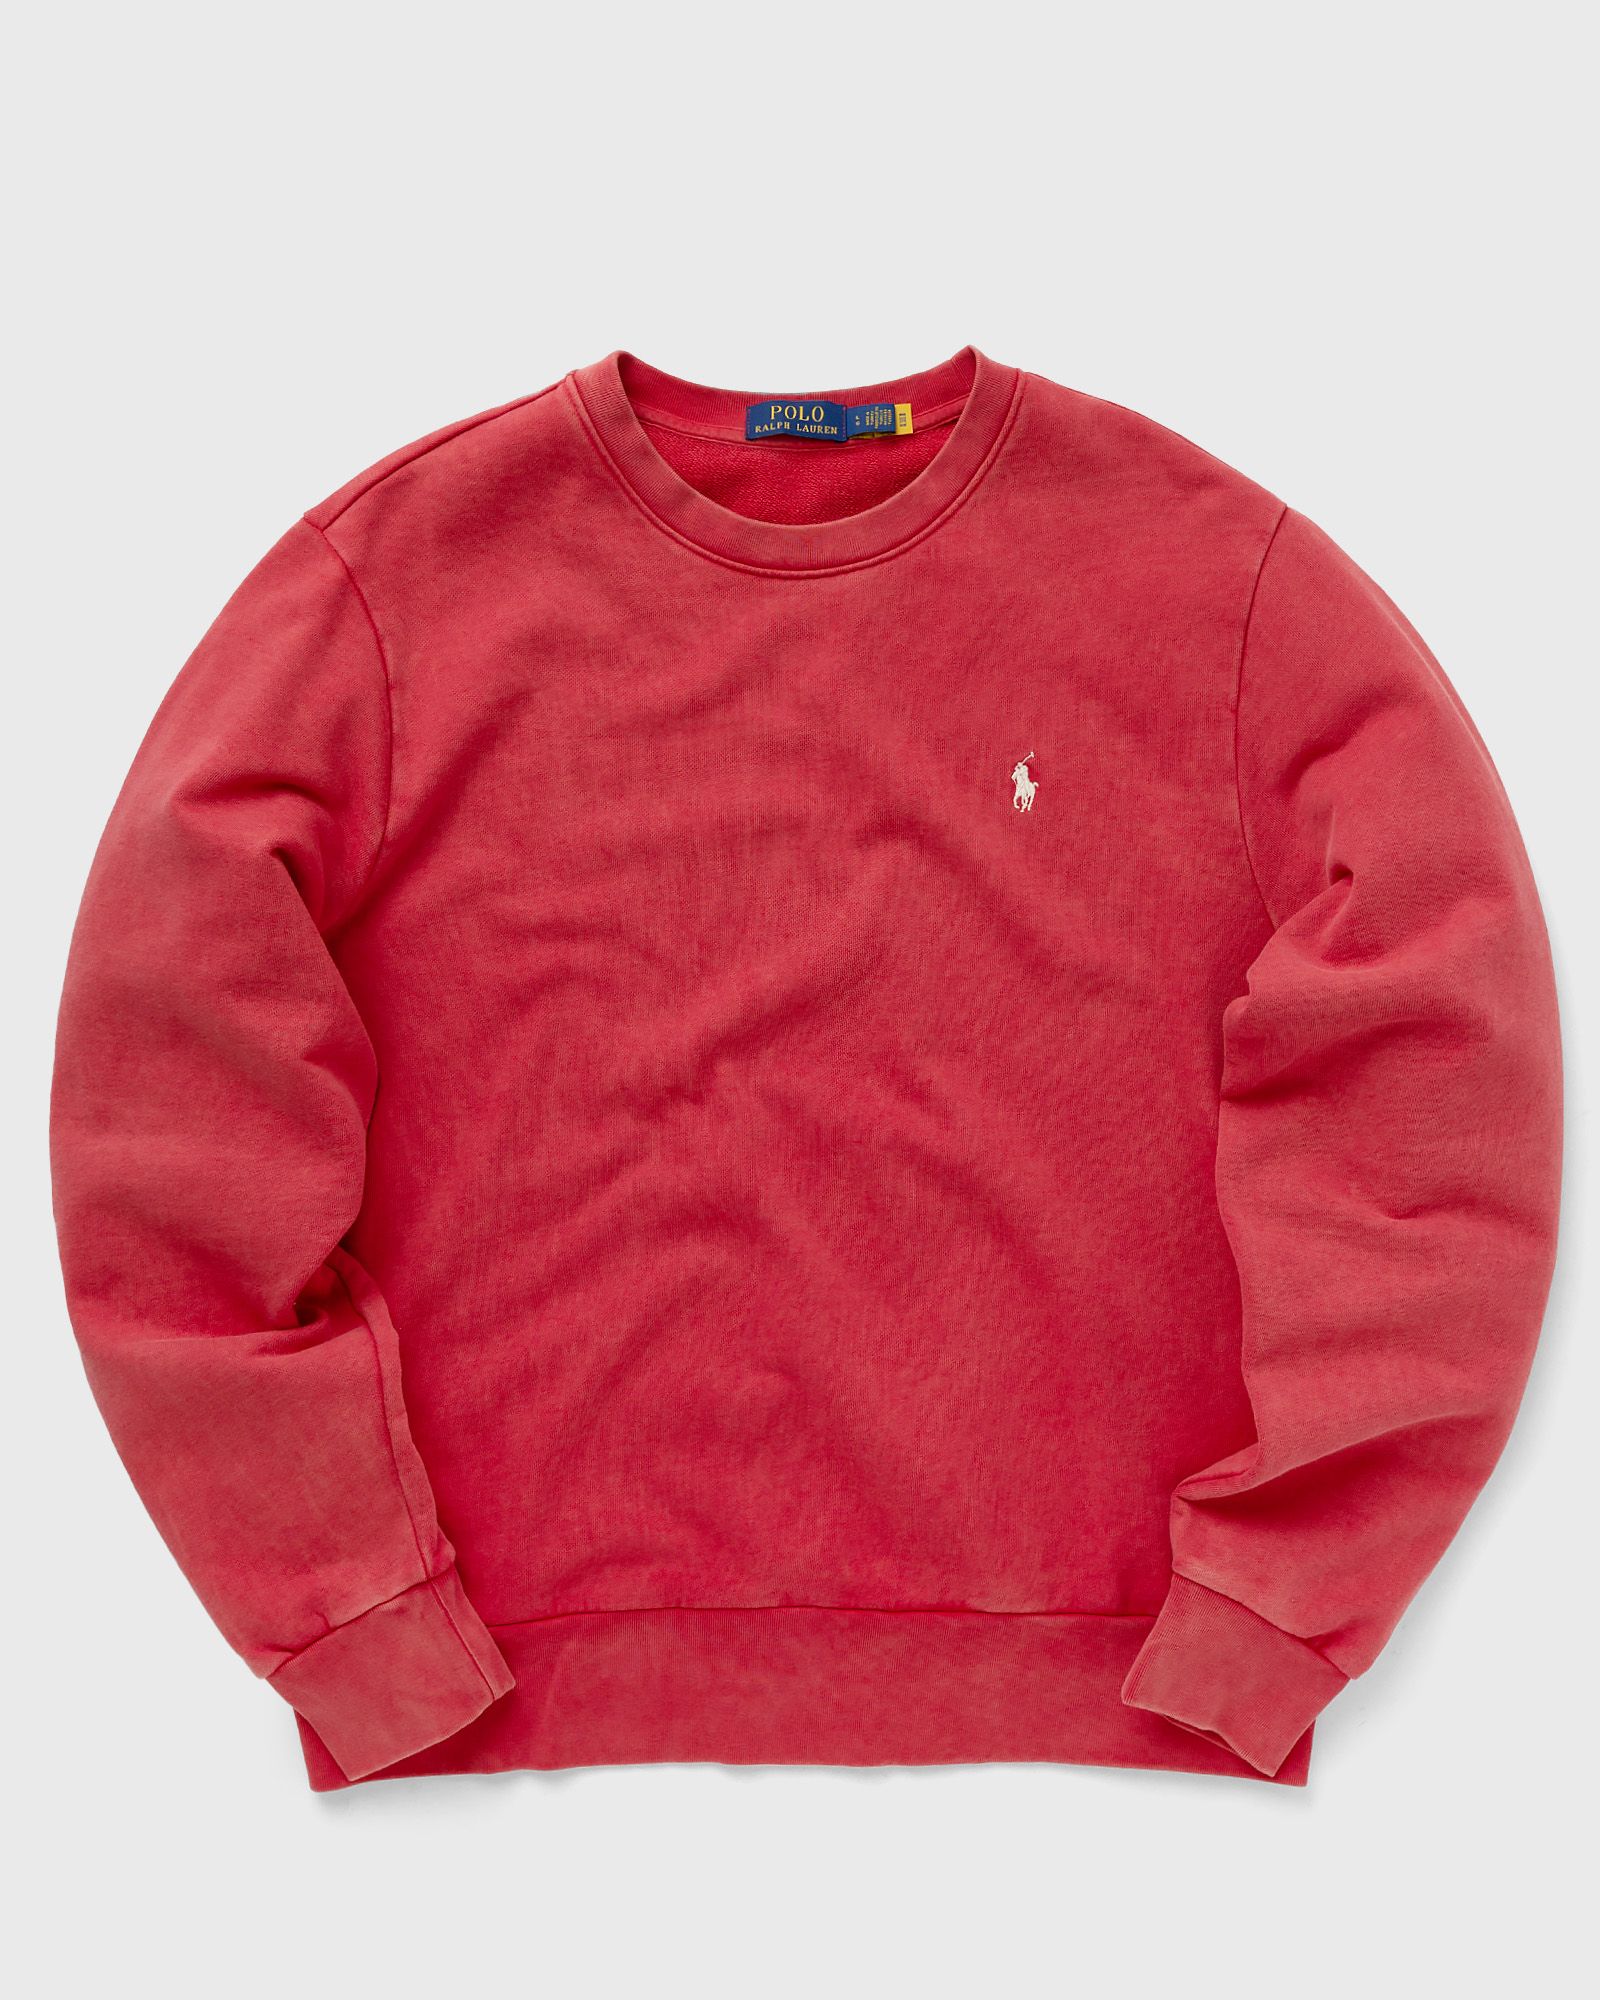 Polo Ralph Lauren - long sleeve-sweatshirt men sweatshirts red in größe:xl